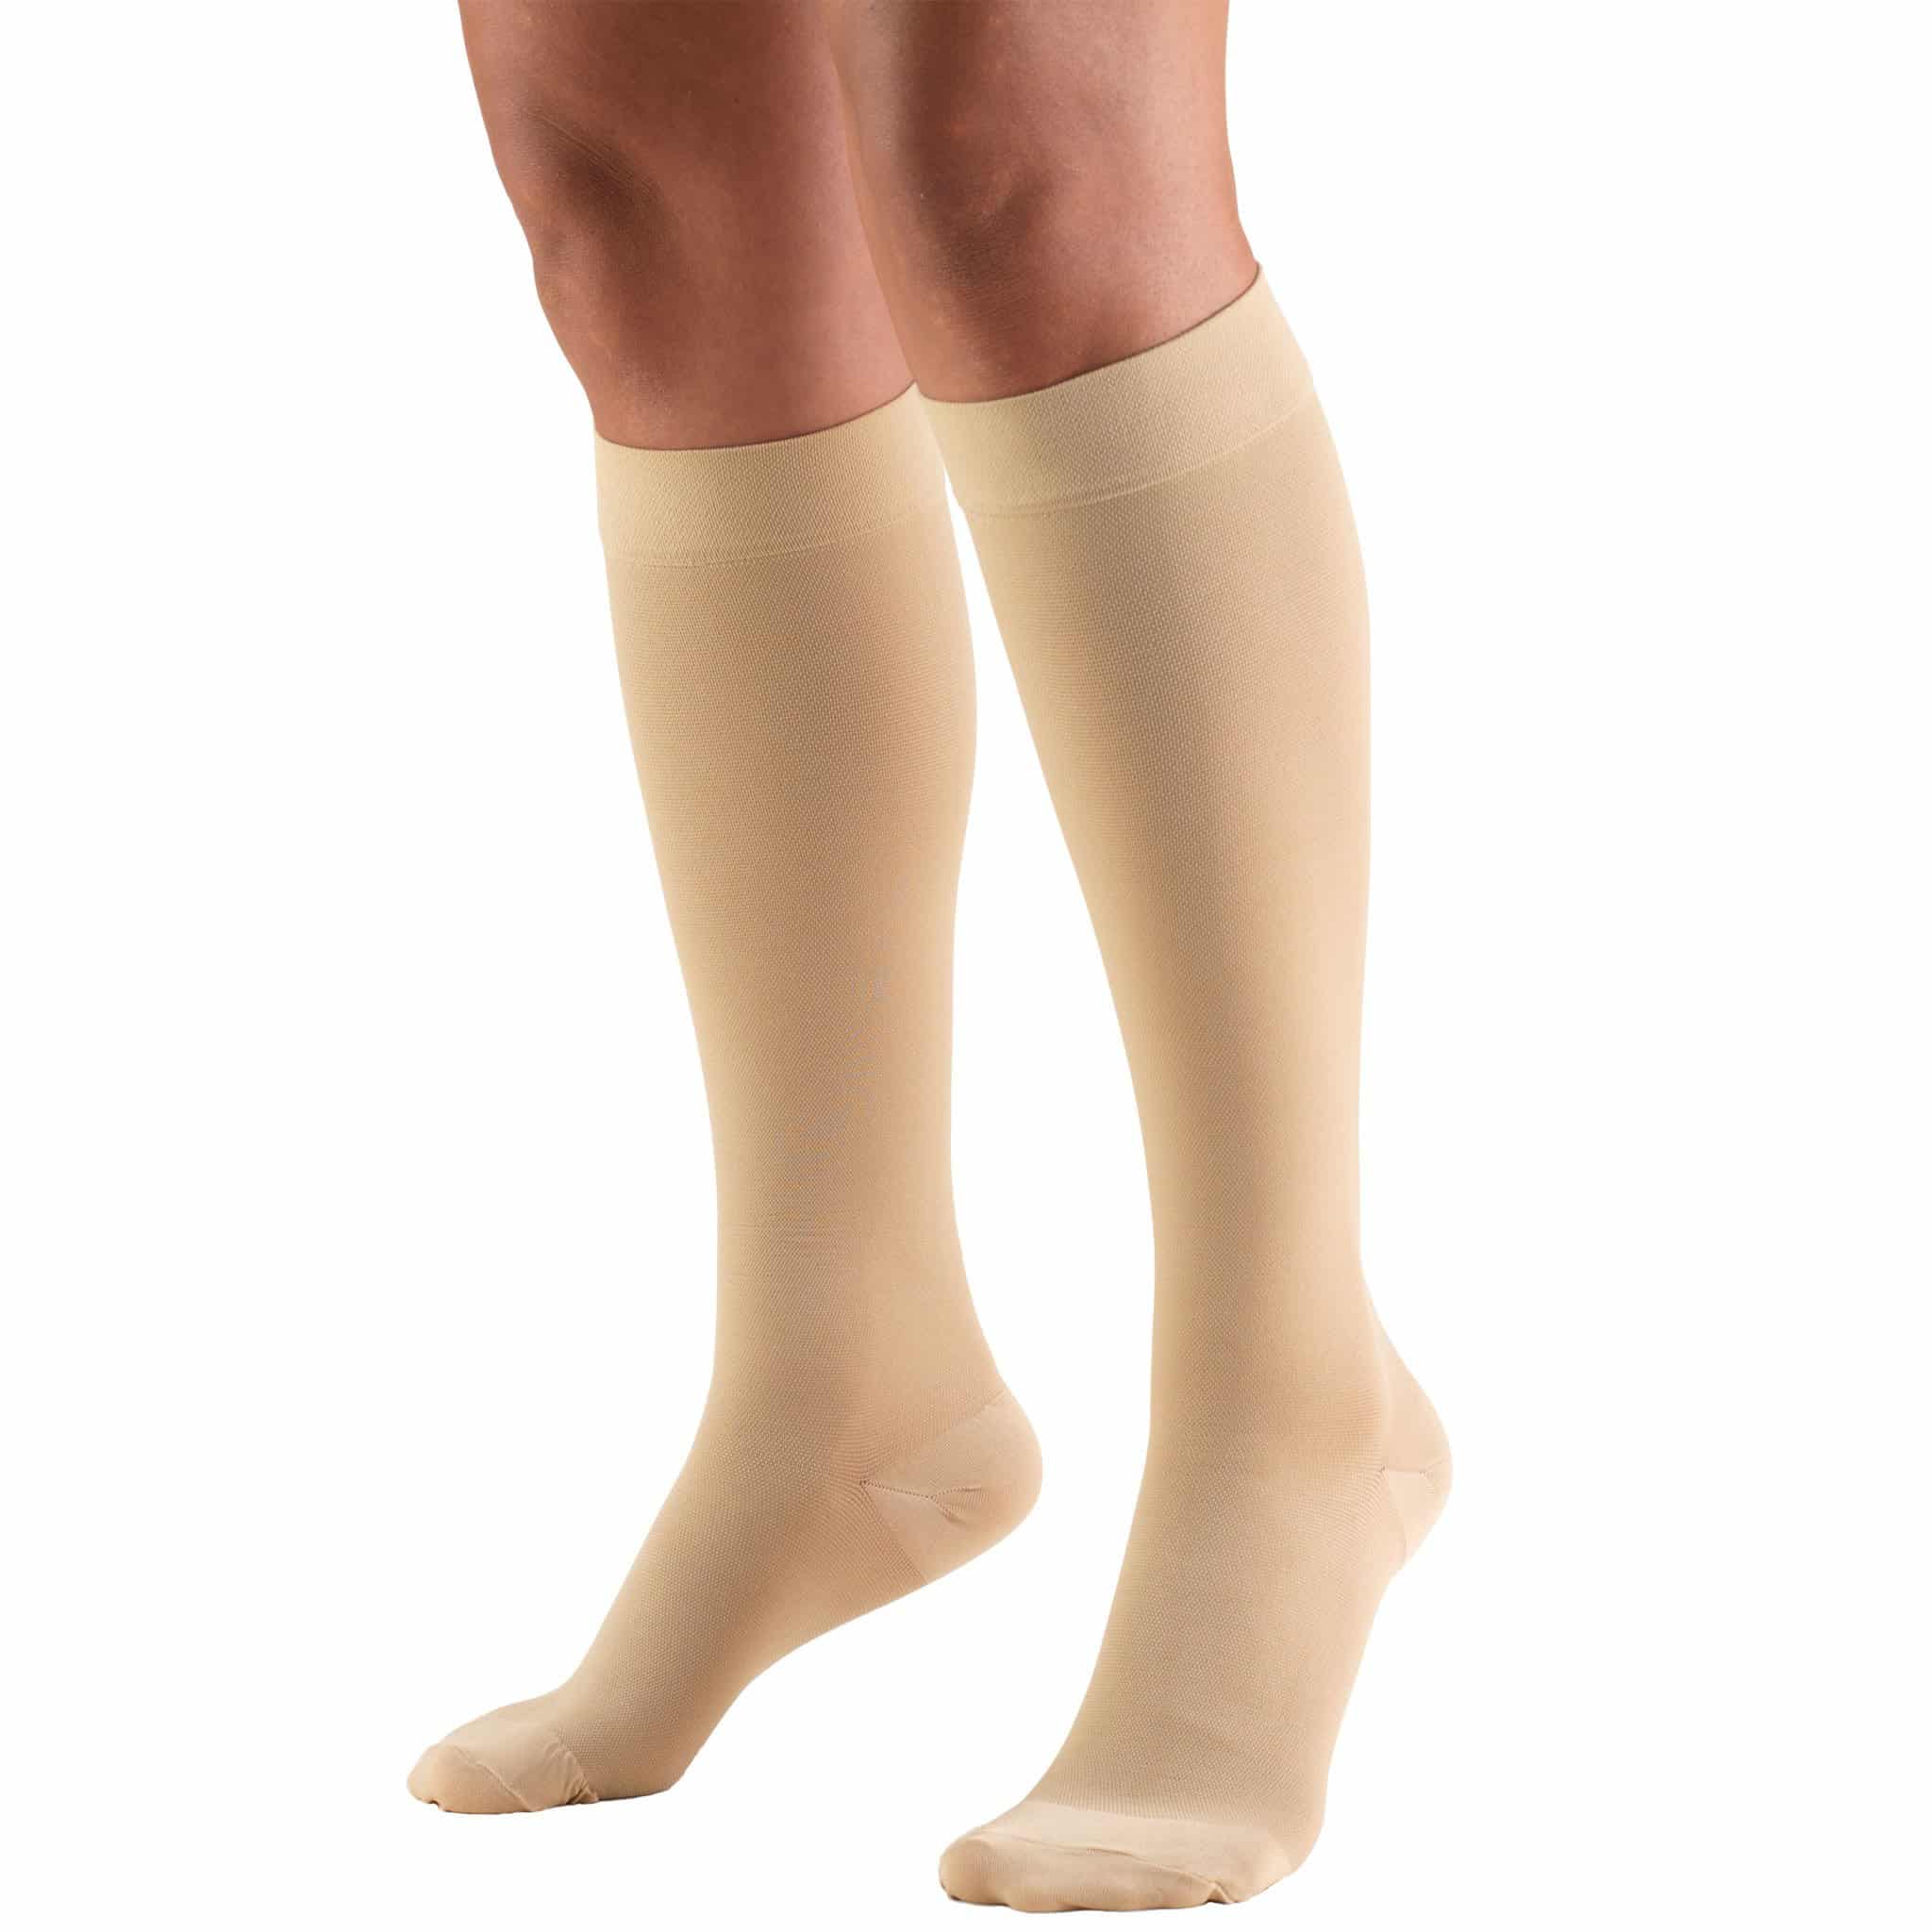 Truform Compression Stocking Knee High 20